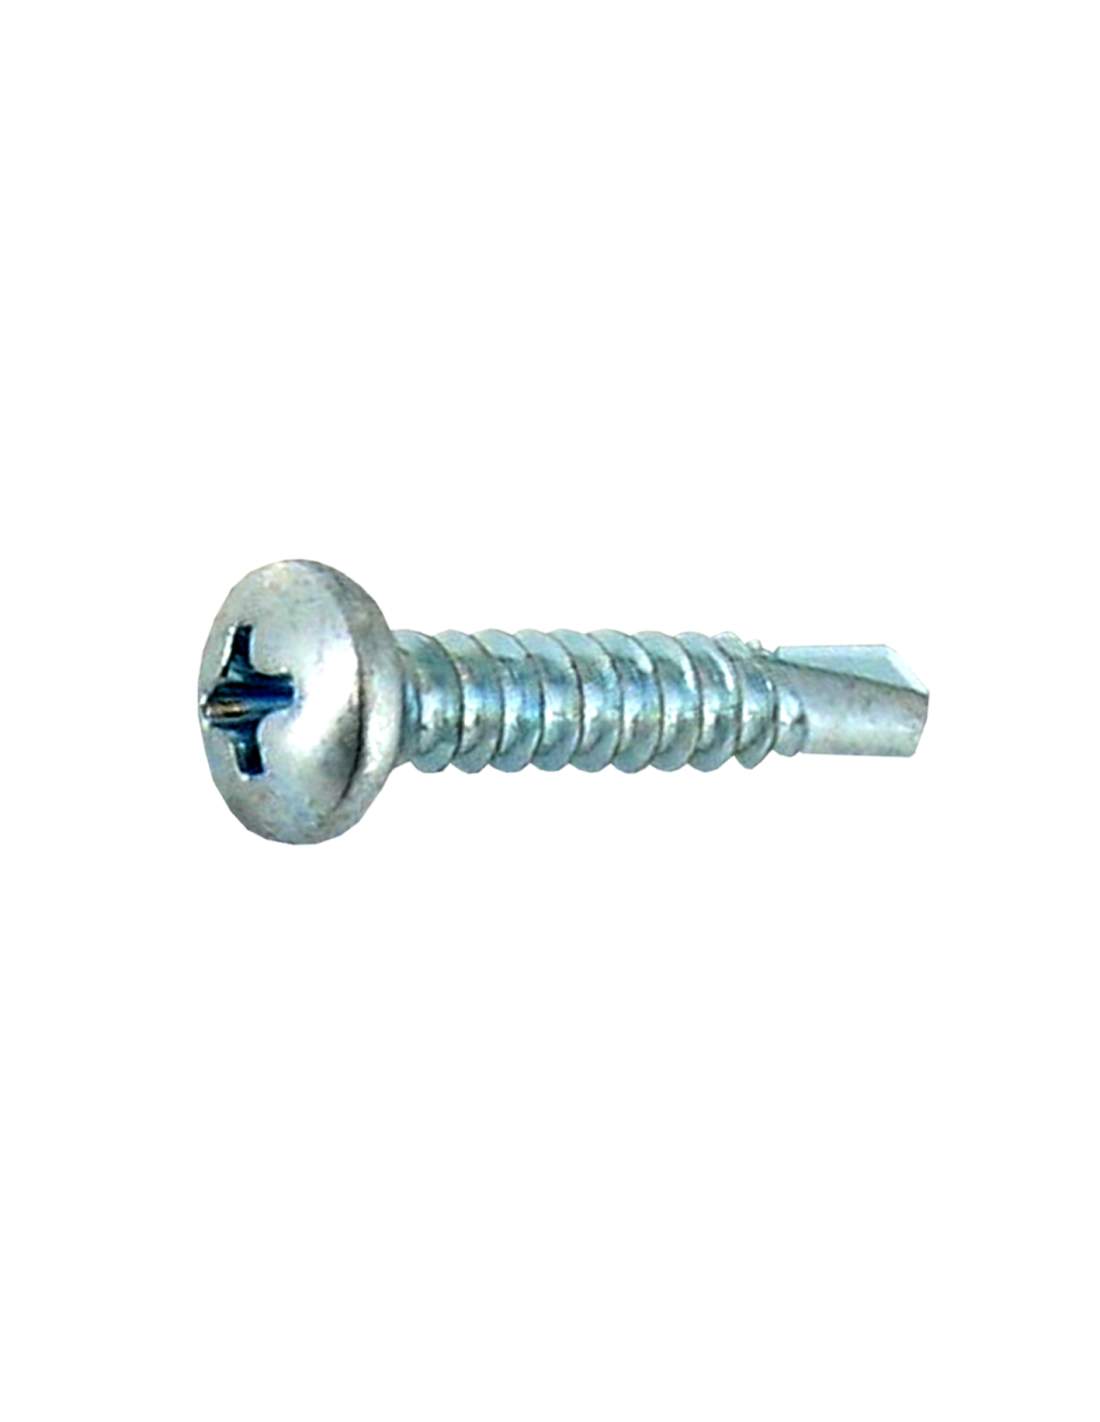 AZI 4.2x16 pan head self-drilling sheet metal screws, 20 pcs.